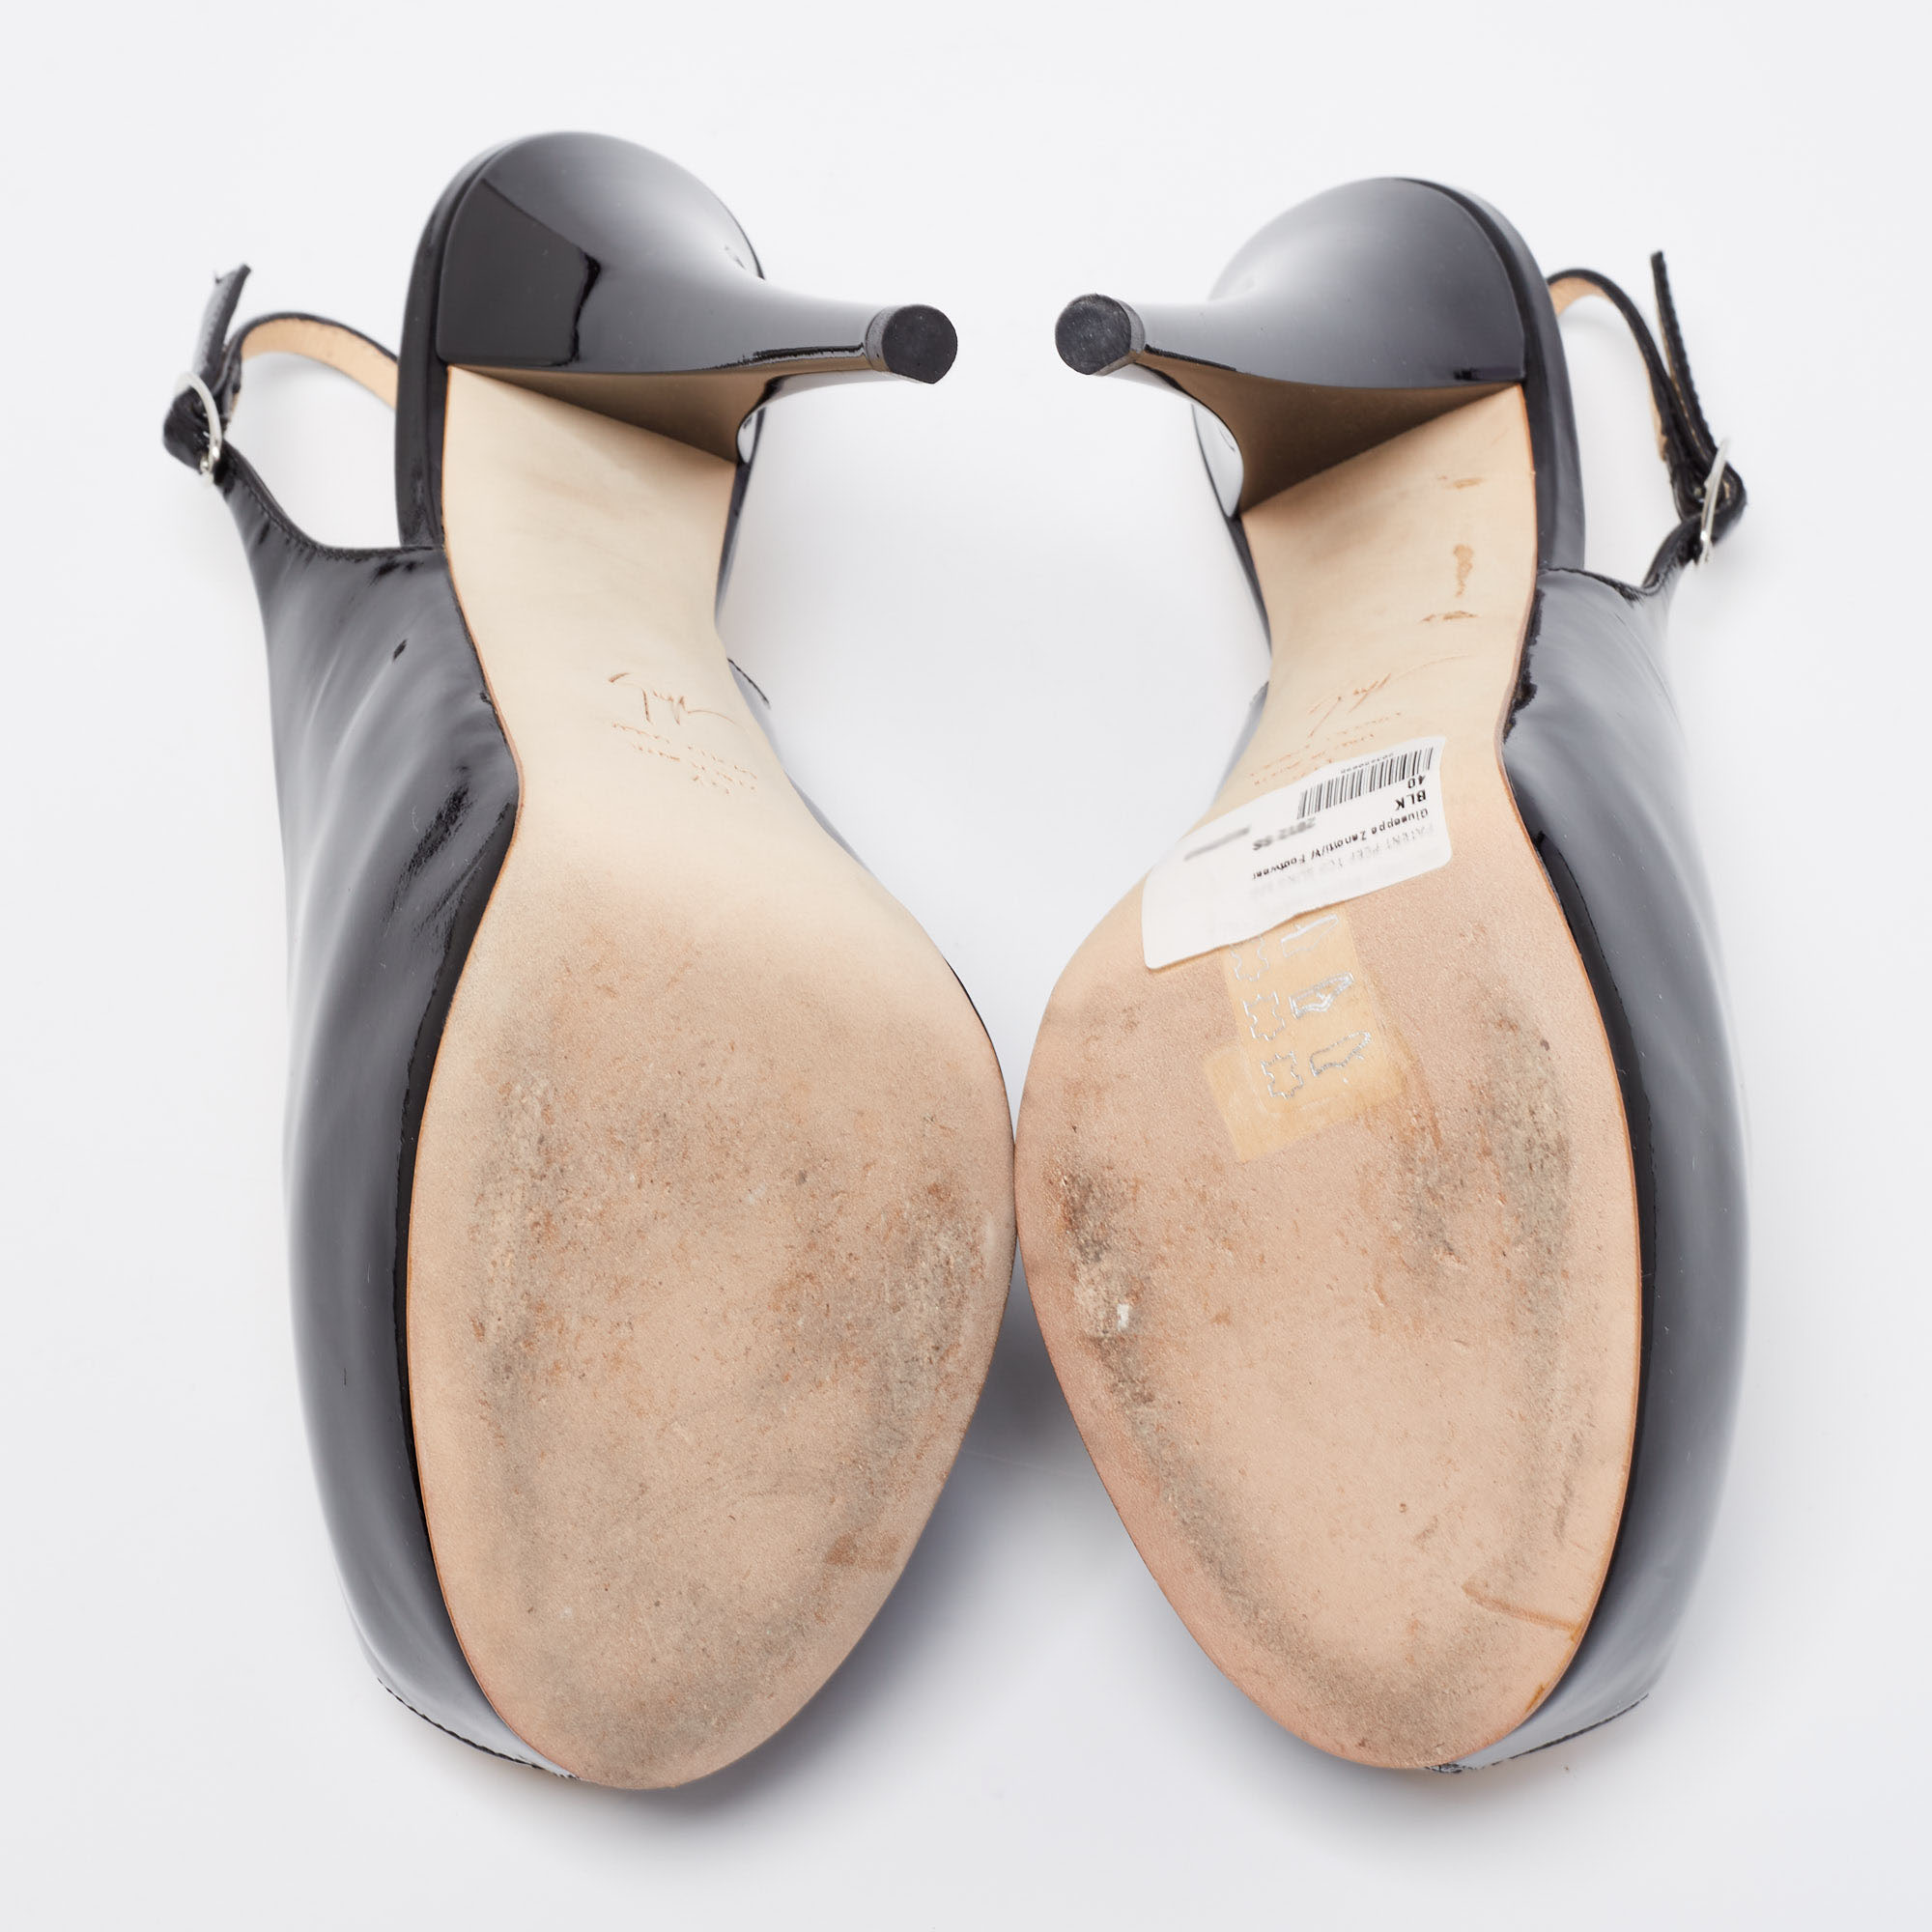 Giuseppe Zanotti Black Patent Leather Peep Toe Slingback Platform Sandals Size 40